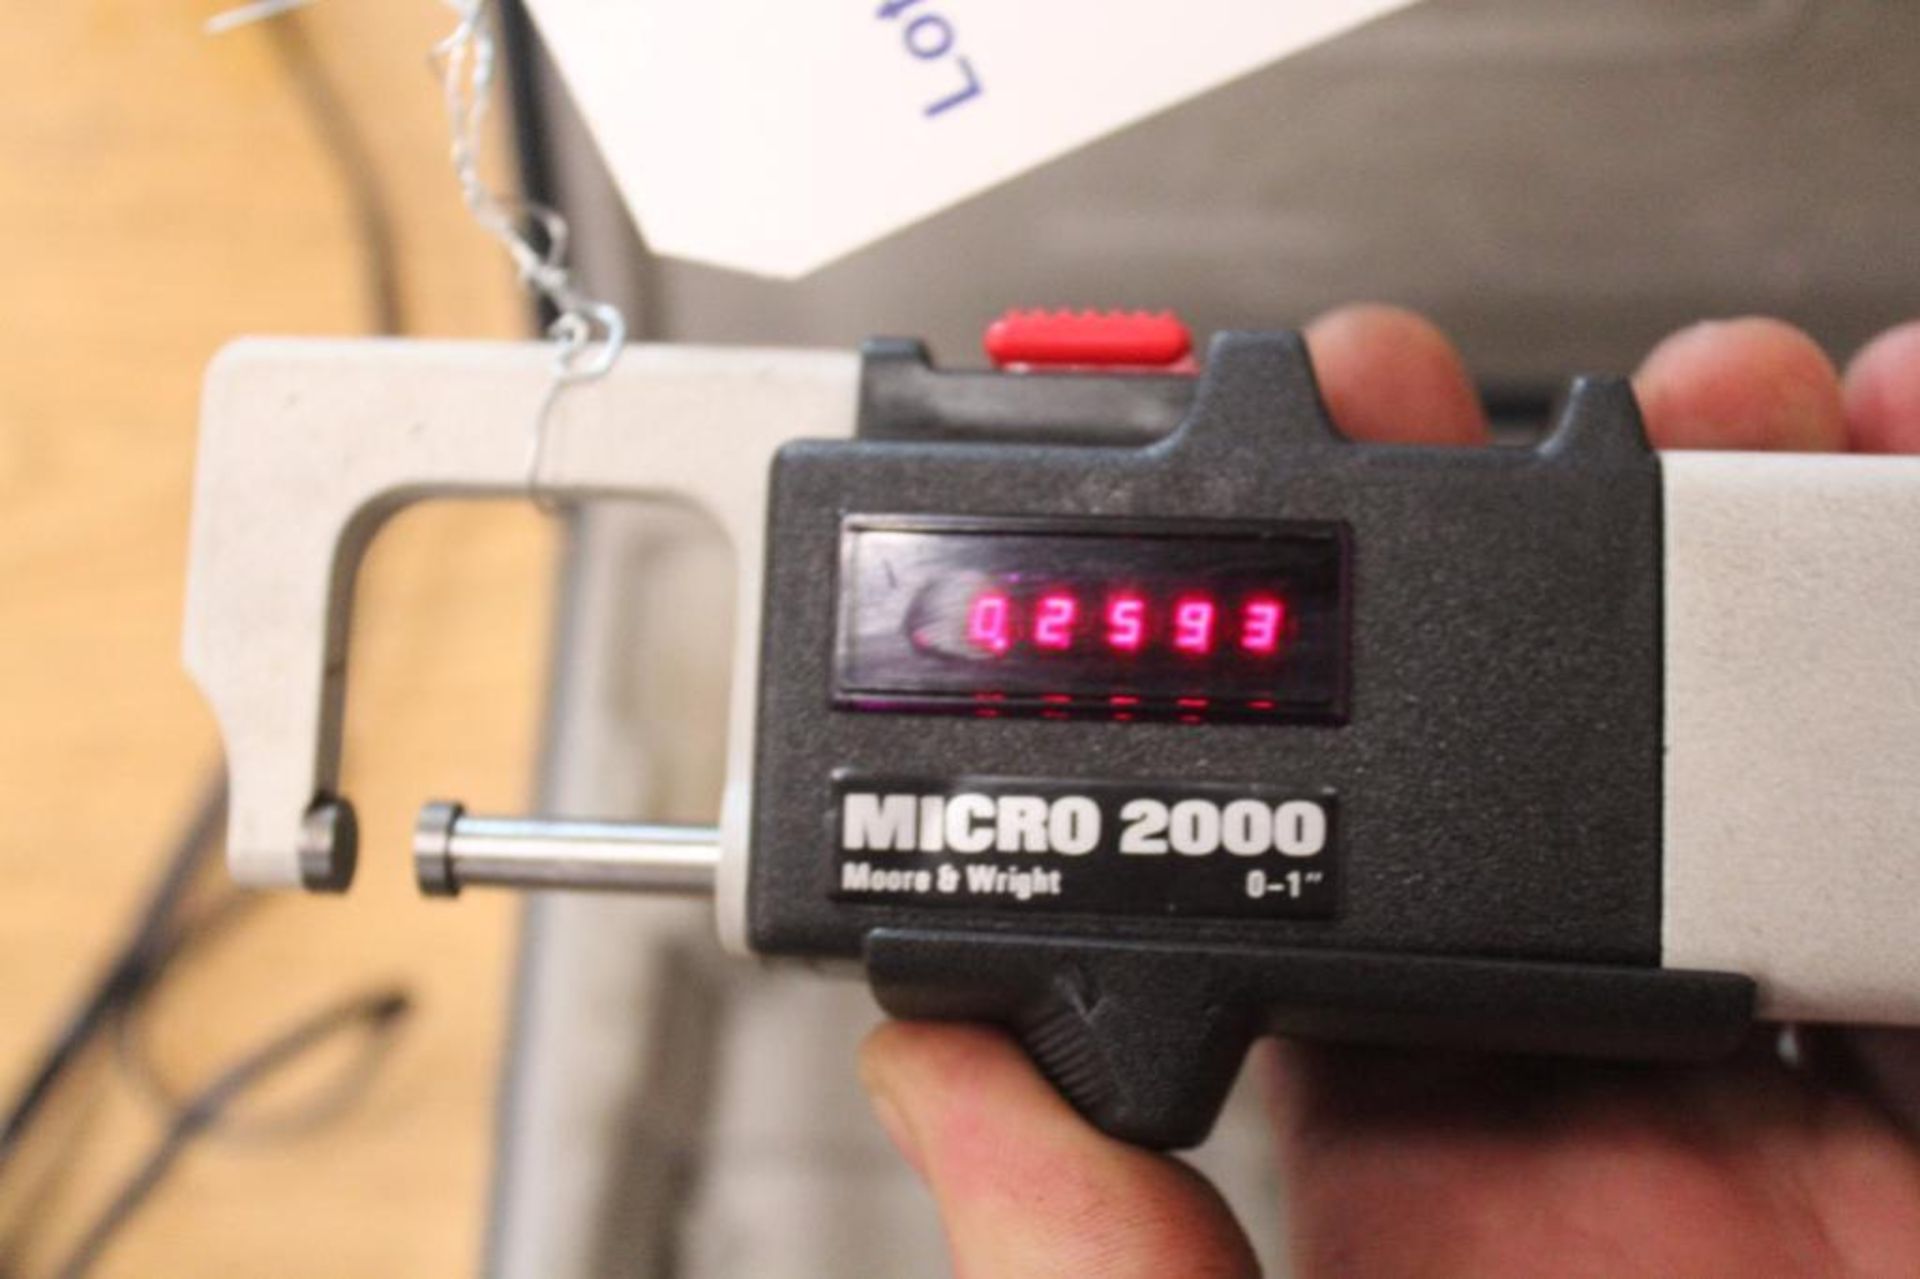 Moore & Wright Micro 2000 0-1" digital micrometer - Image 3 of 6